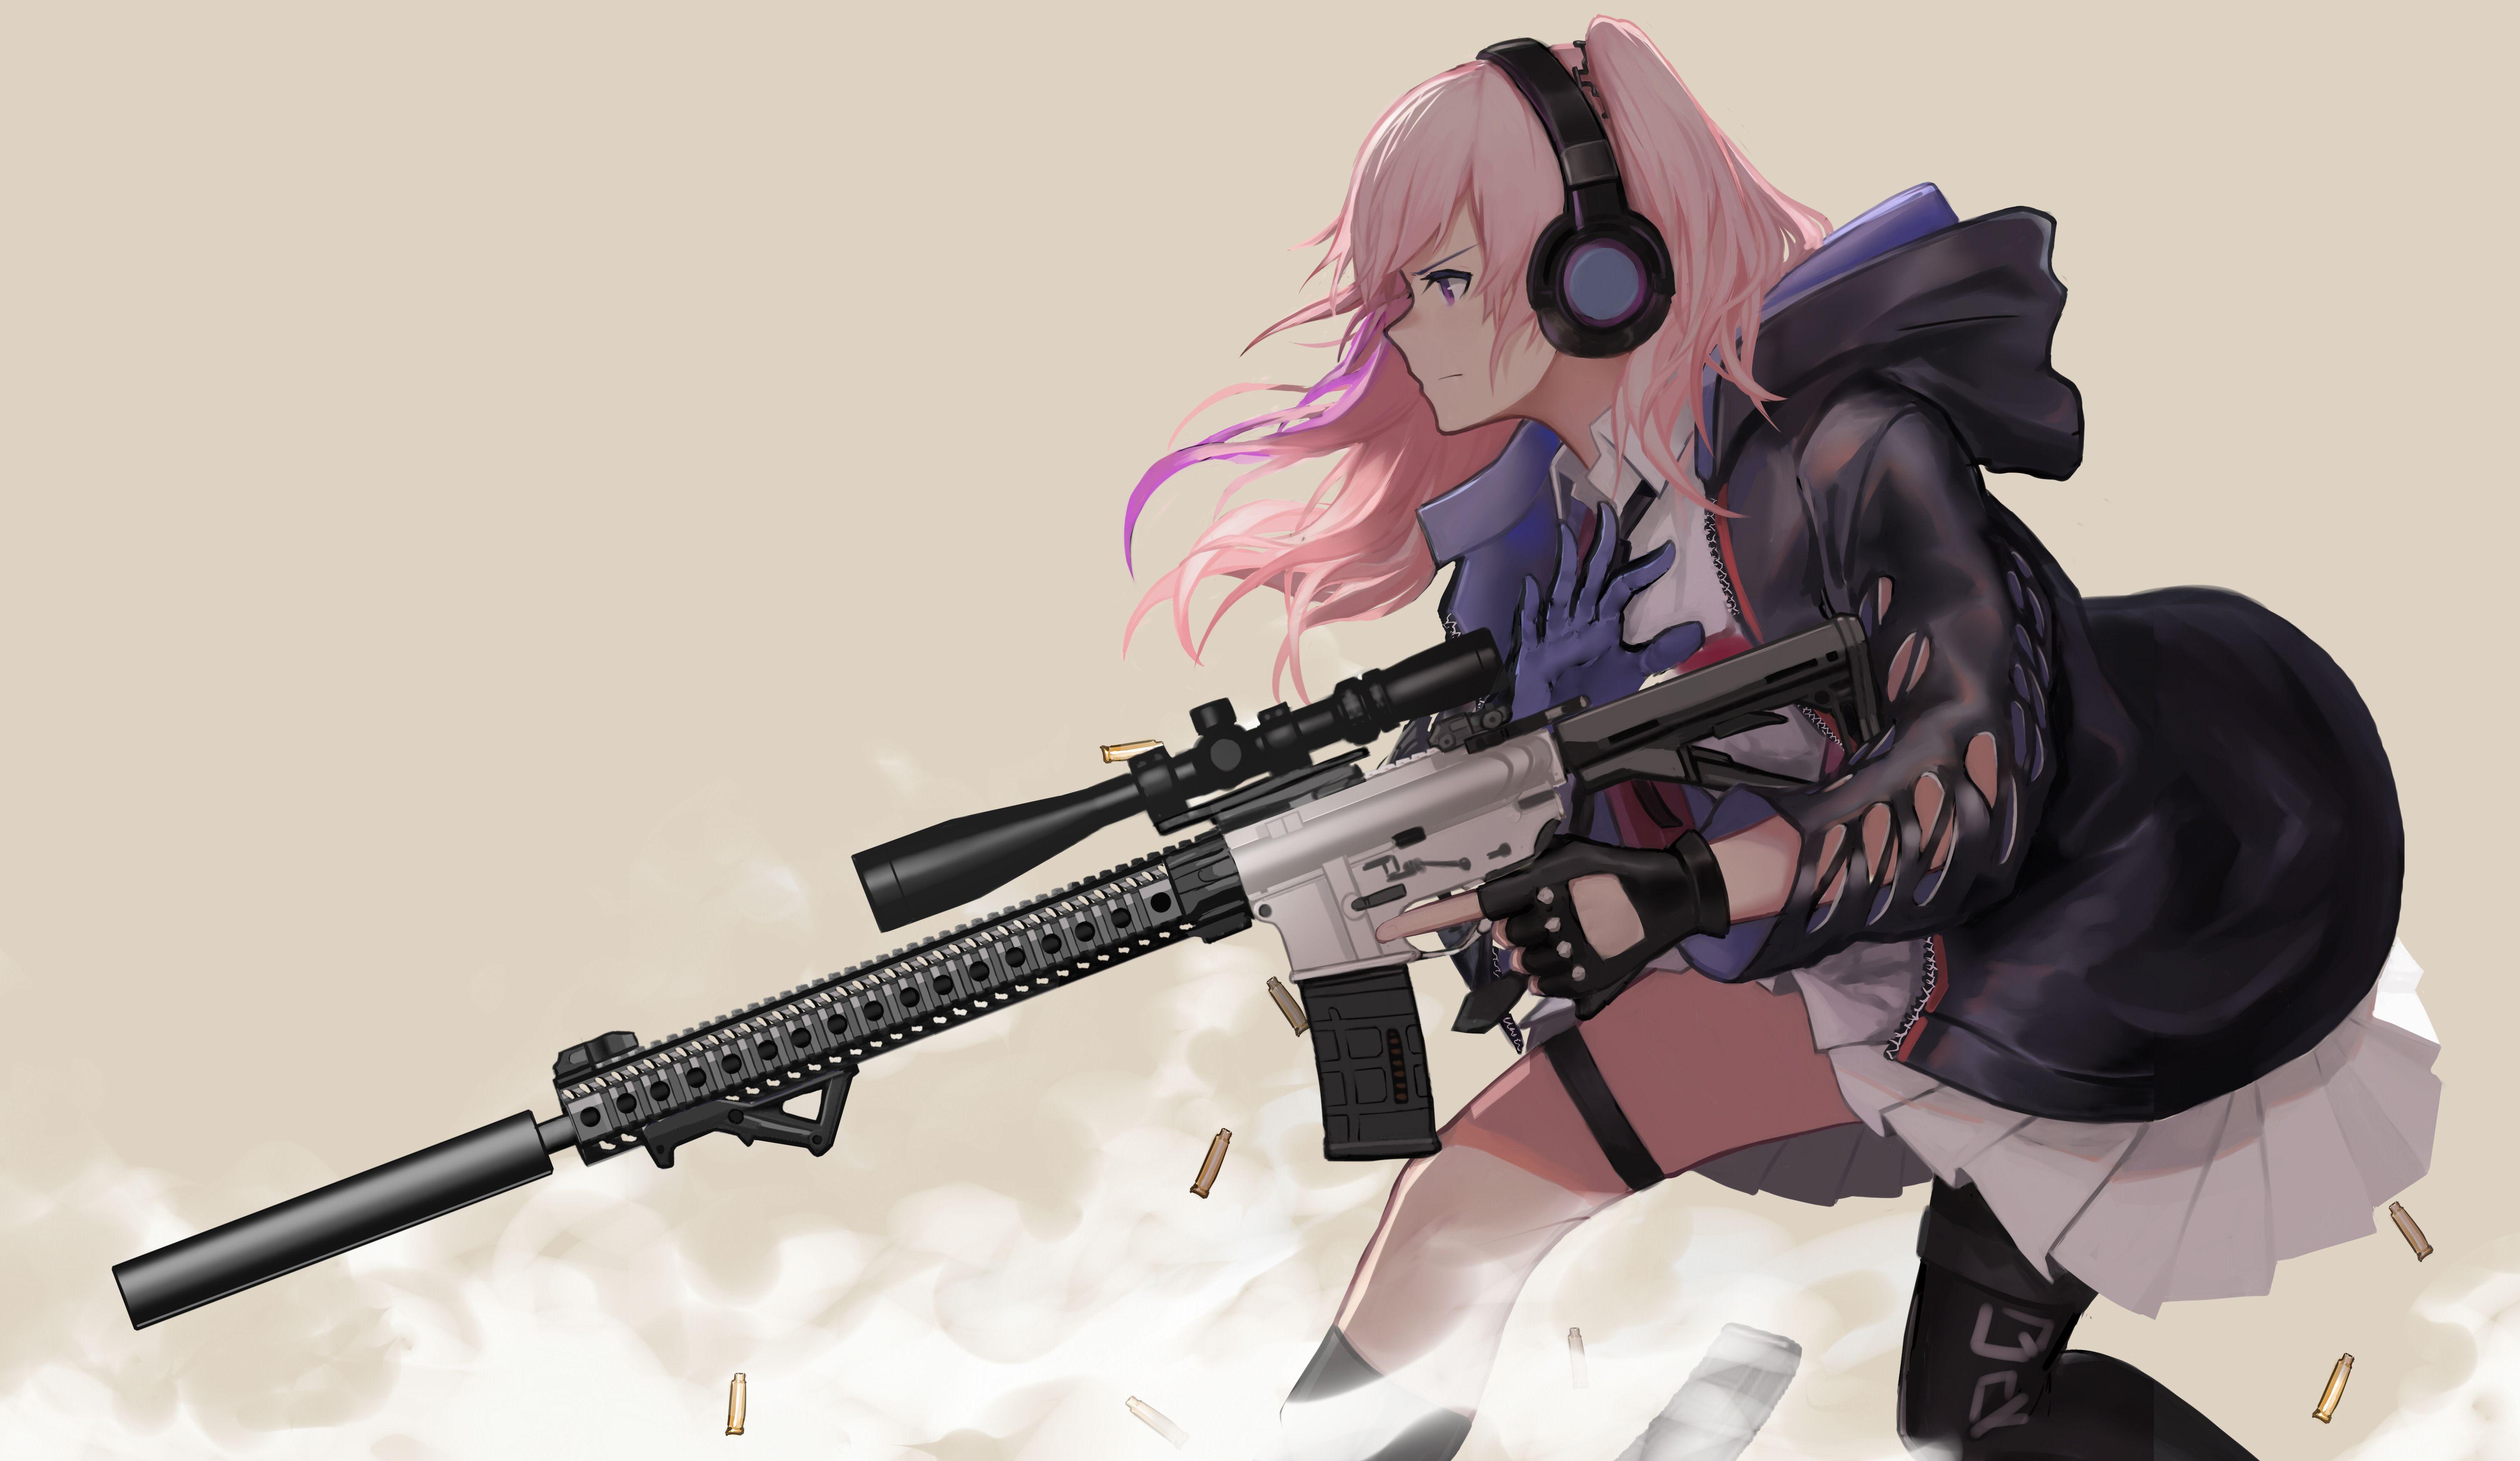 Anime Girls With Guns : anime, Anime Girls, Gun, Weapon, Uniform